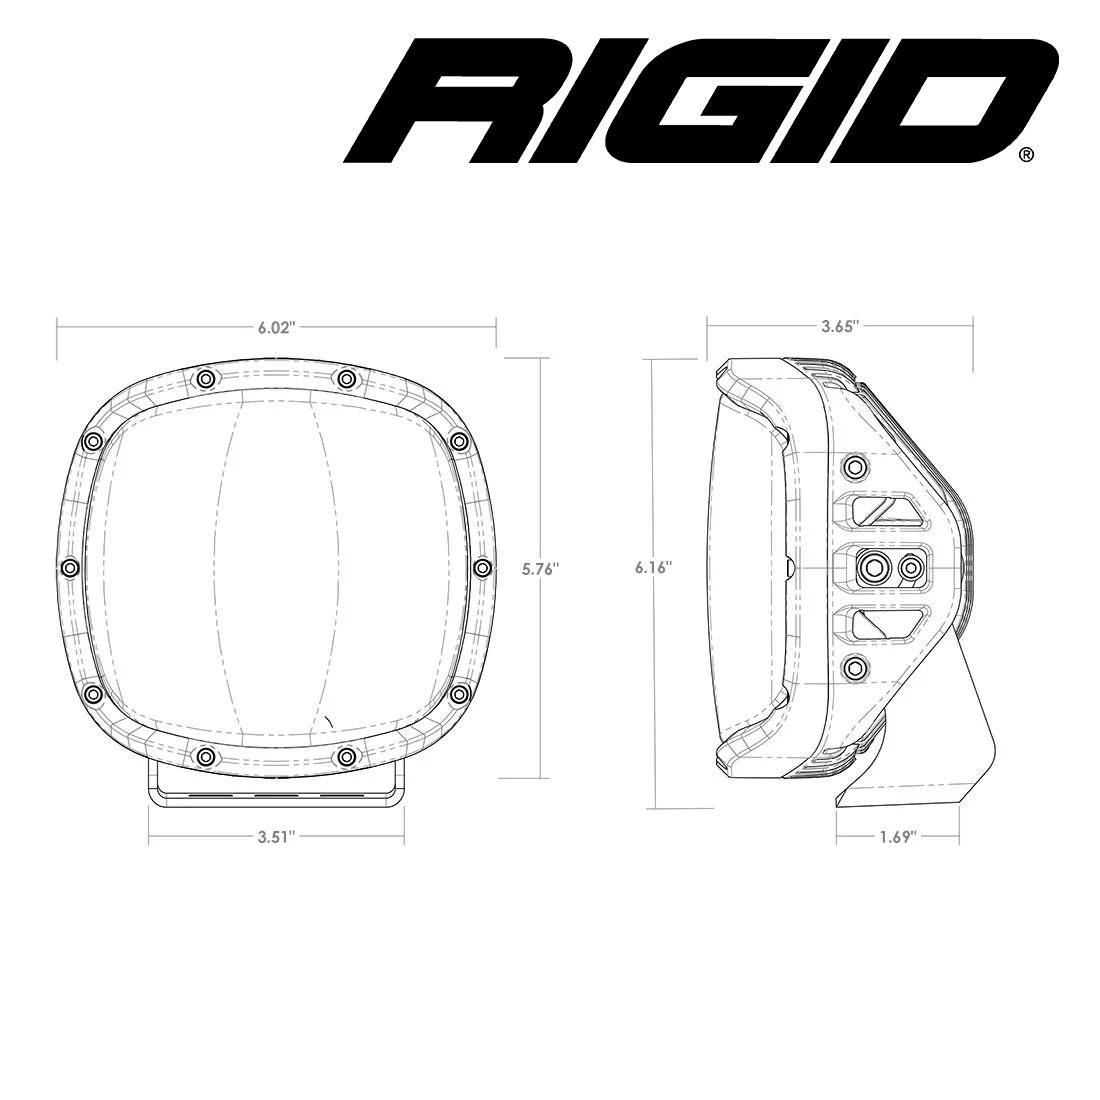 Rigid-300415 - Rigid Adapt XP Extreme Powersports LED Lights - Pair